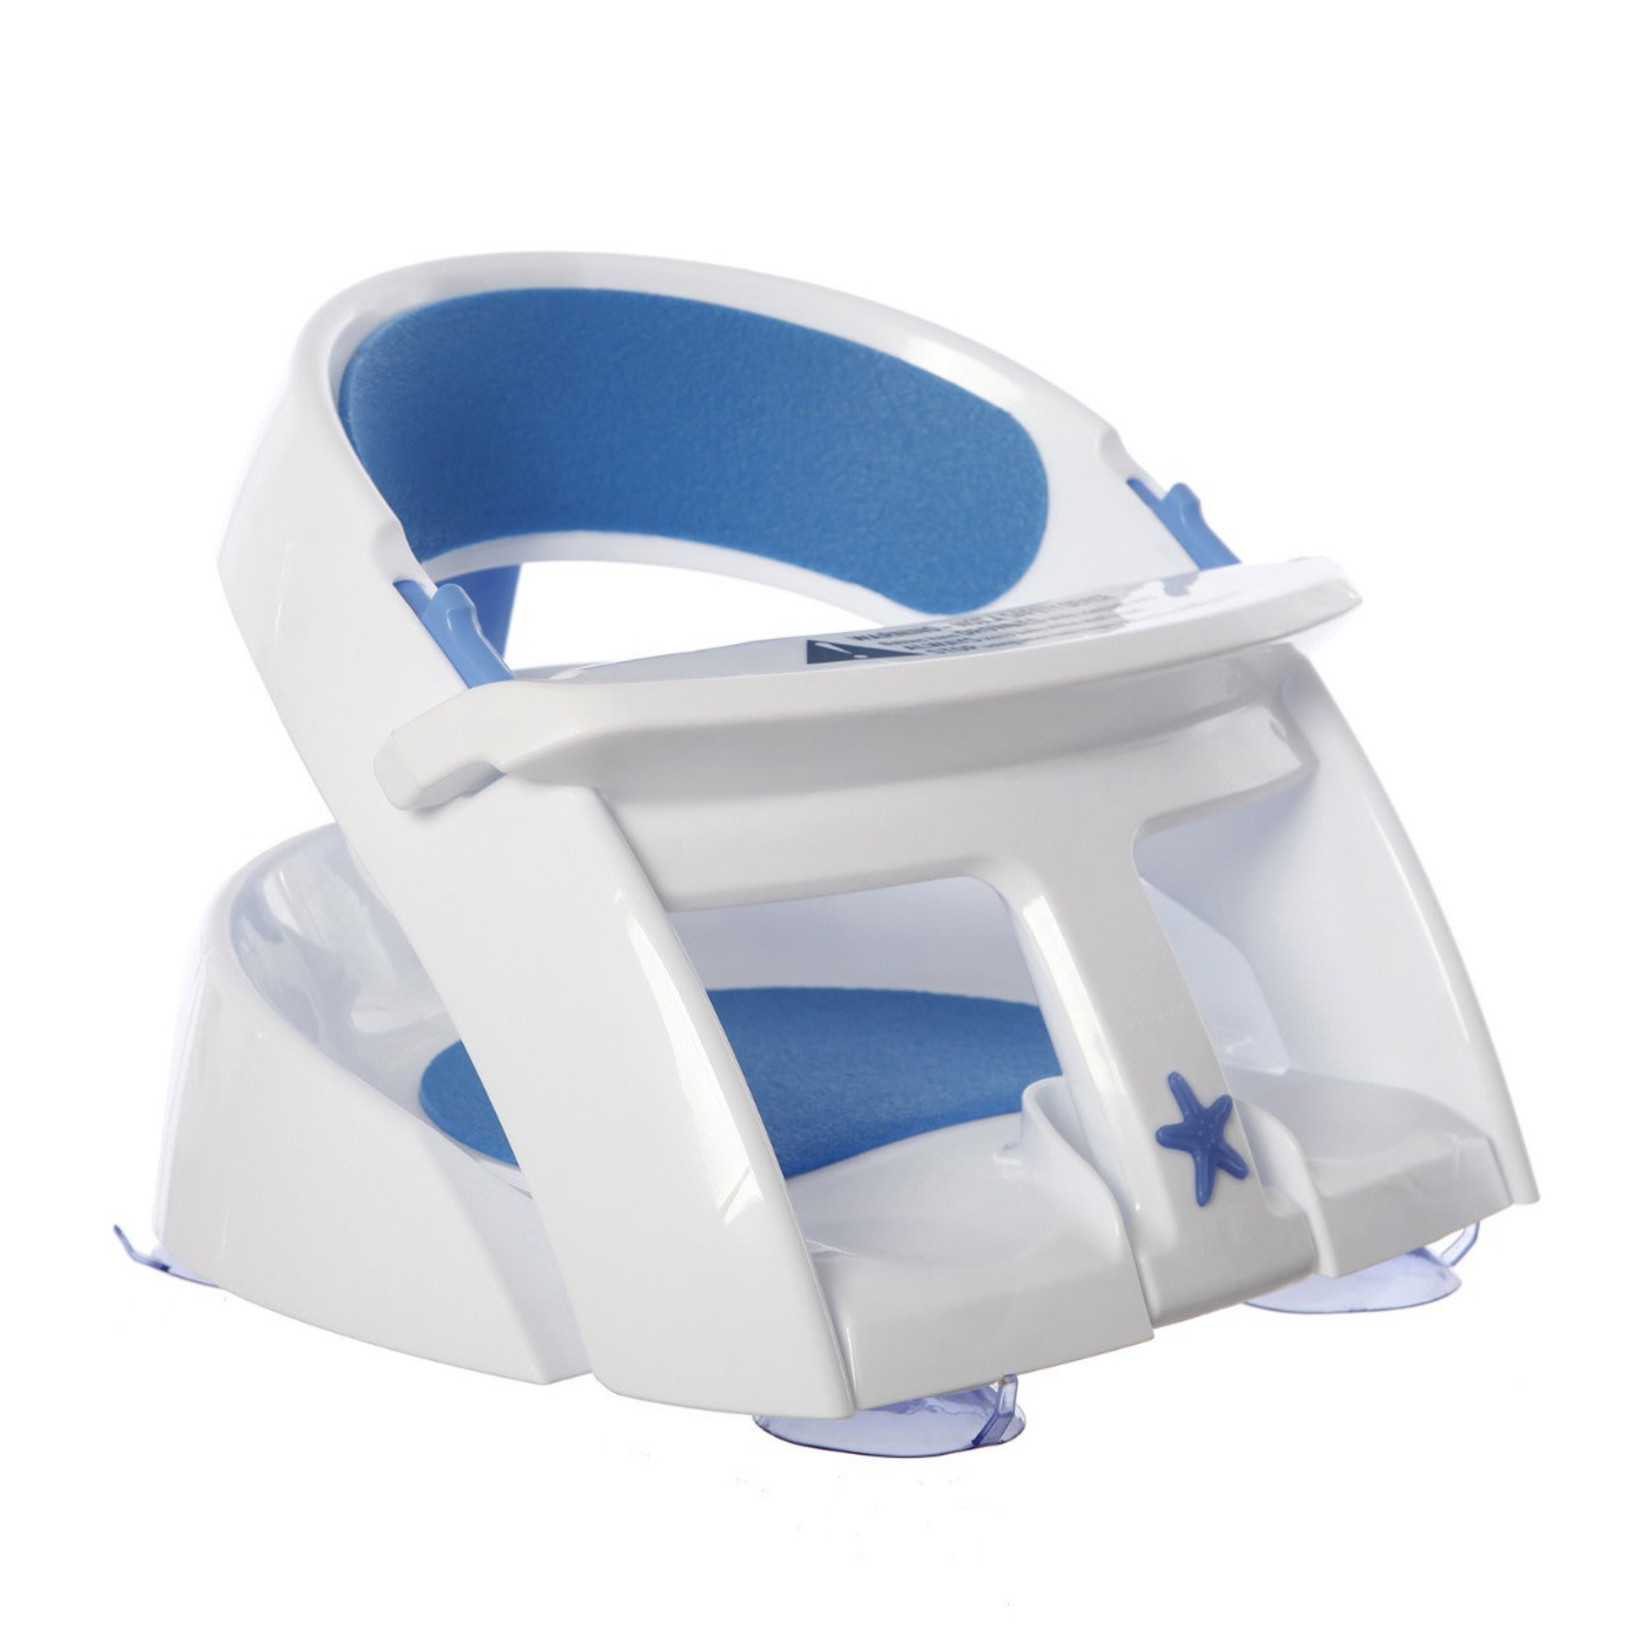 Dreambaby deluxe bath seat with foam padding&heat sensing indicator(F661)